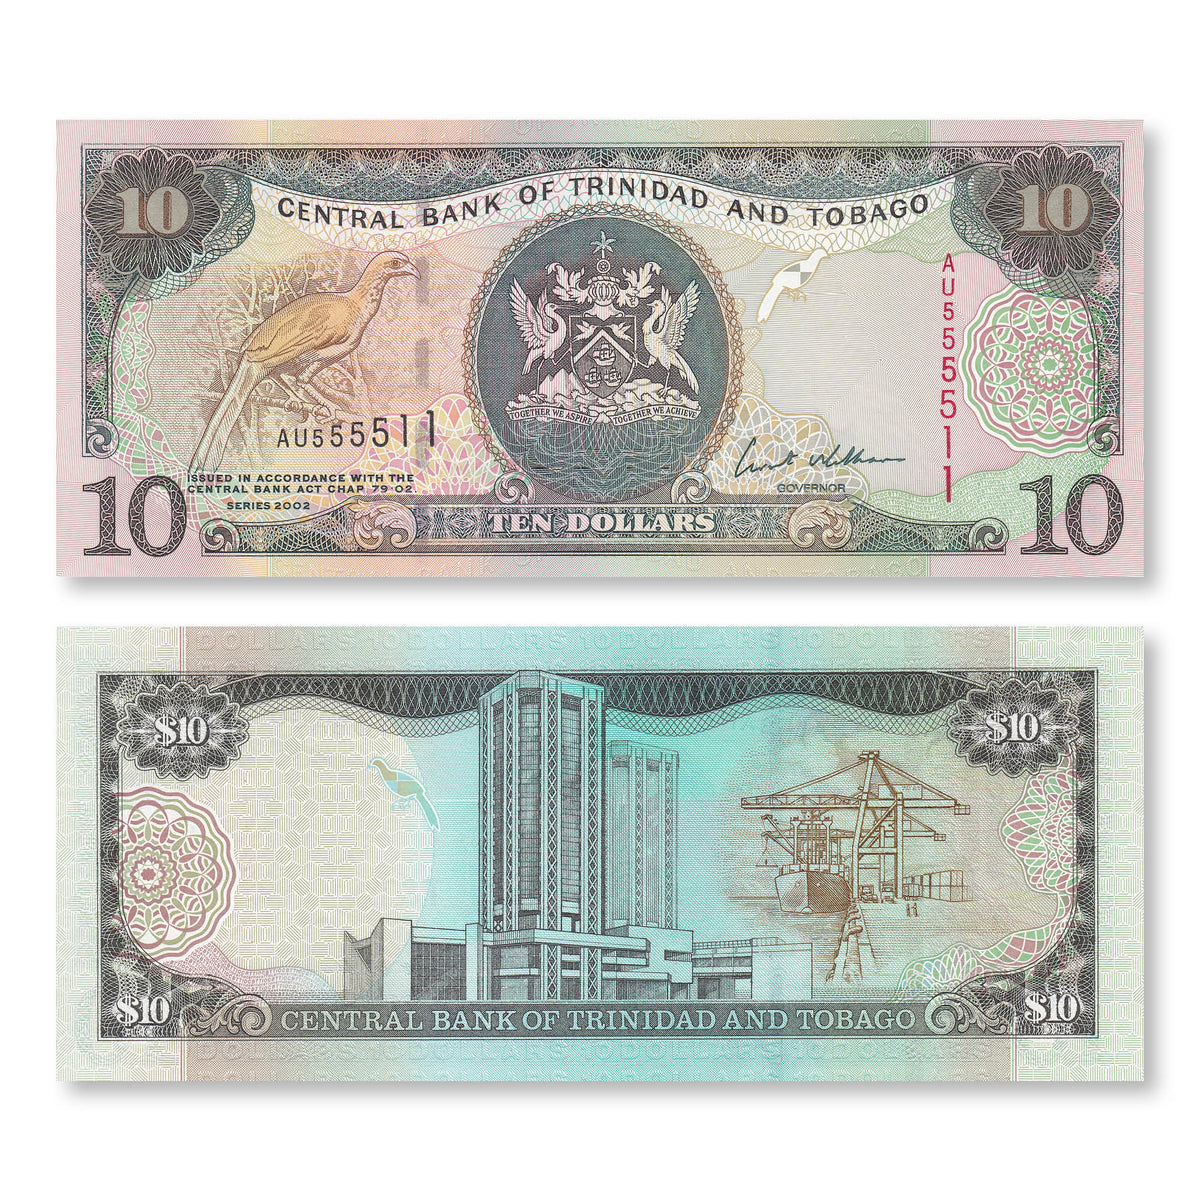 Trinidad & Tobago 10 Dollars, 2002, B218a, P43, UNC - Robert's World Money - World Banknotes